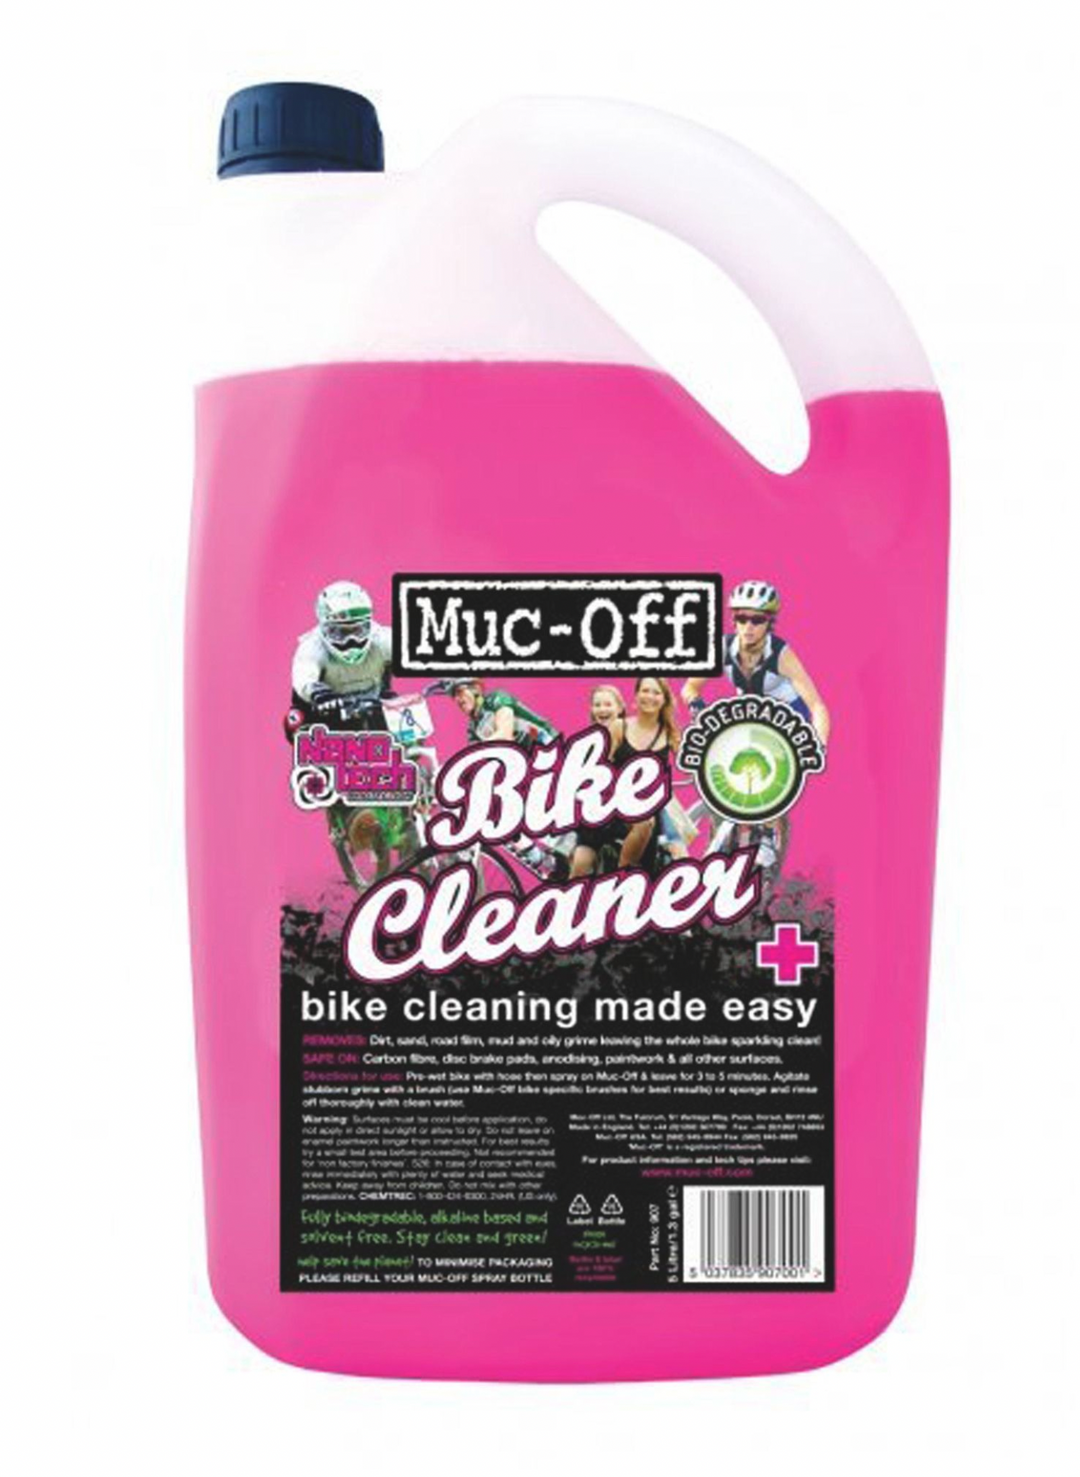 MUC-OFF CLEANER NANO TECH 5 LITRE - Mackay Cycles - [product_SKU] - Muc-Off